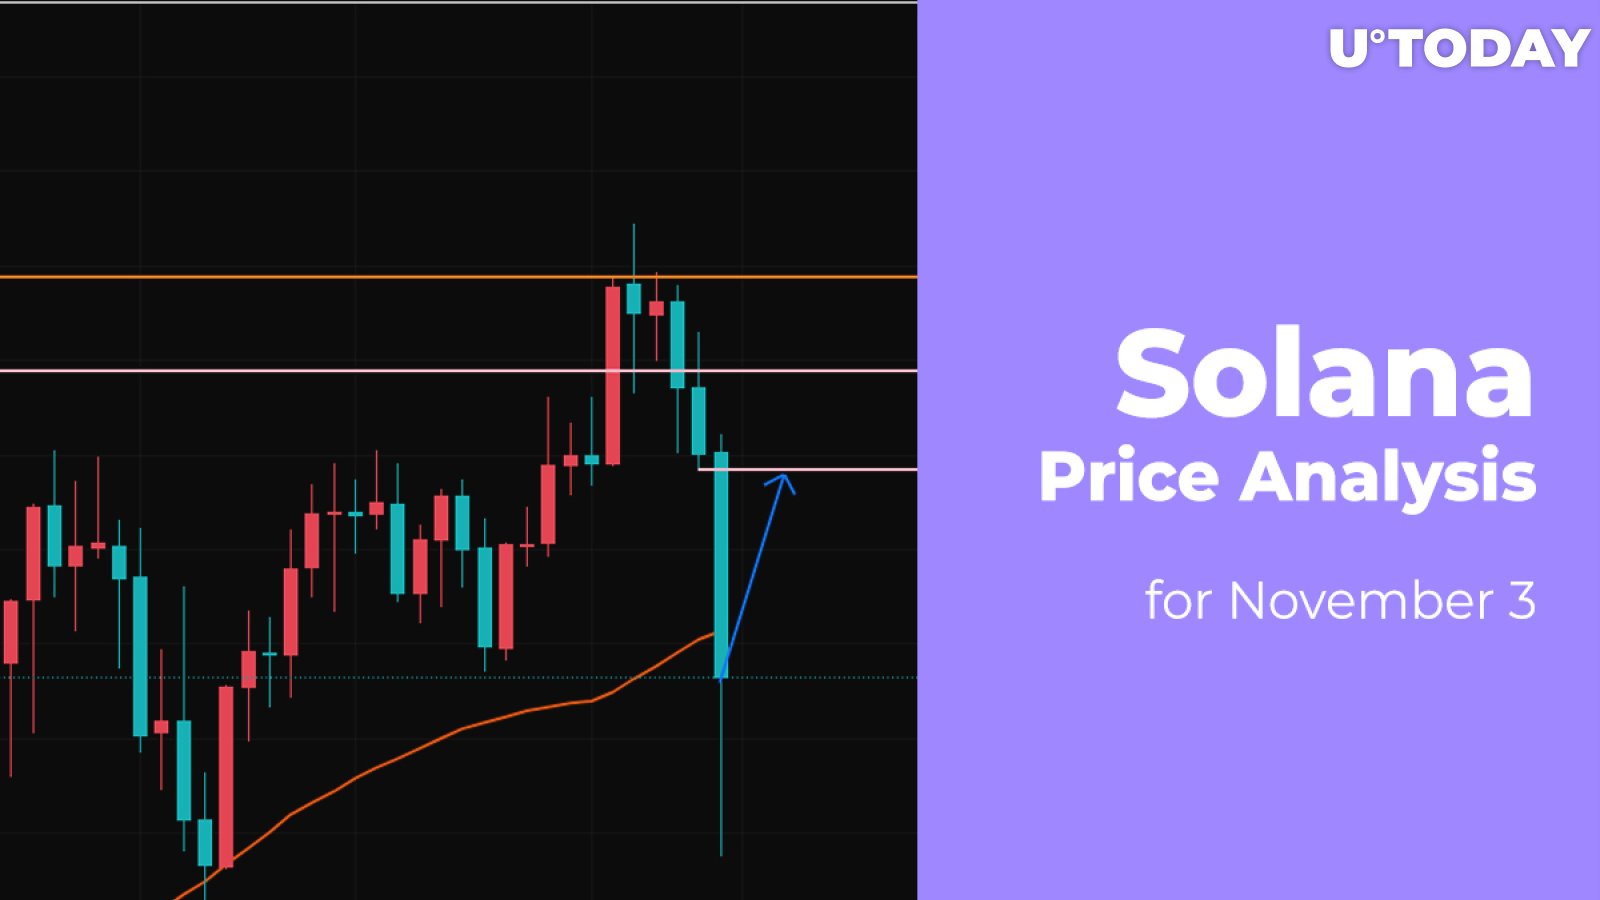 Solana (SOL) Price Analysis for November 3